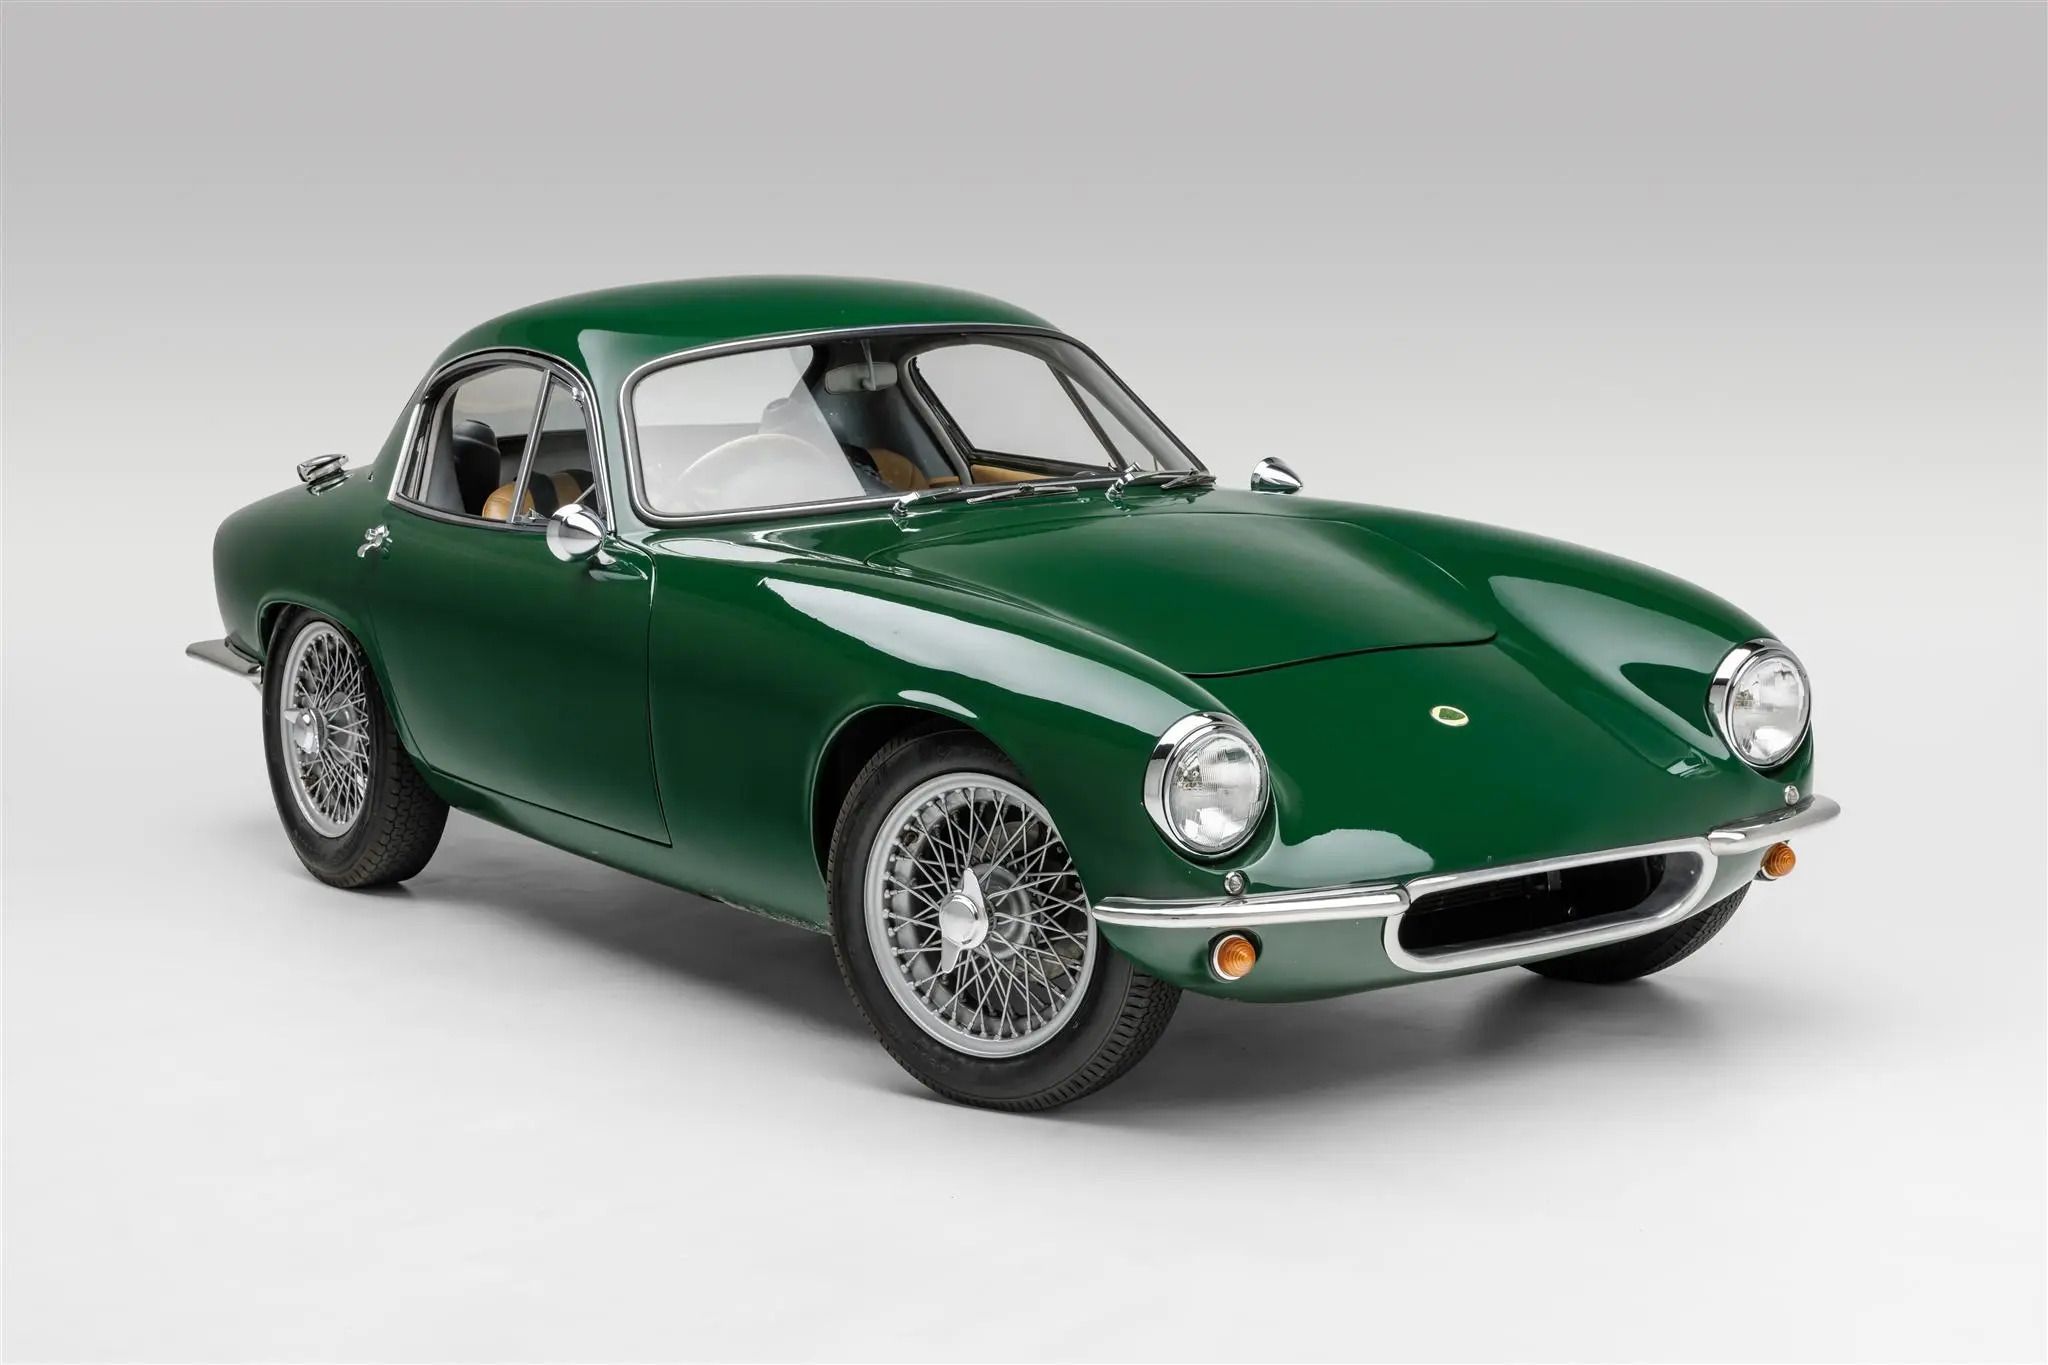 1960 Lotus Elite Series I Auction Front Quarter View